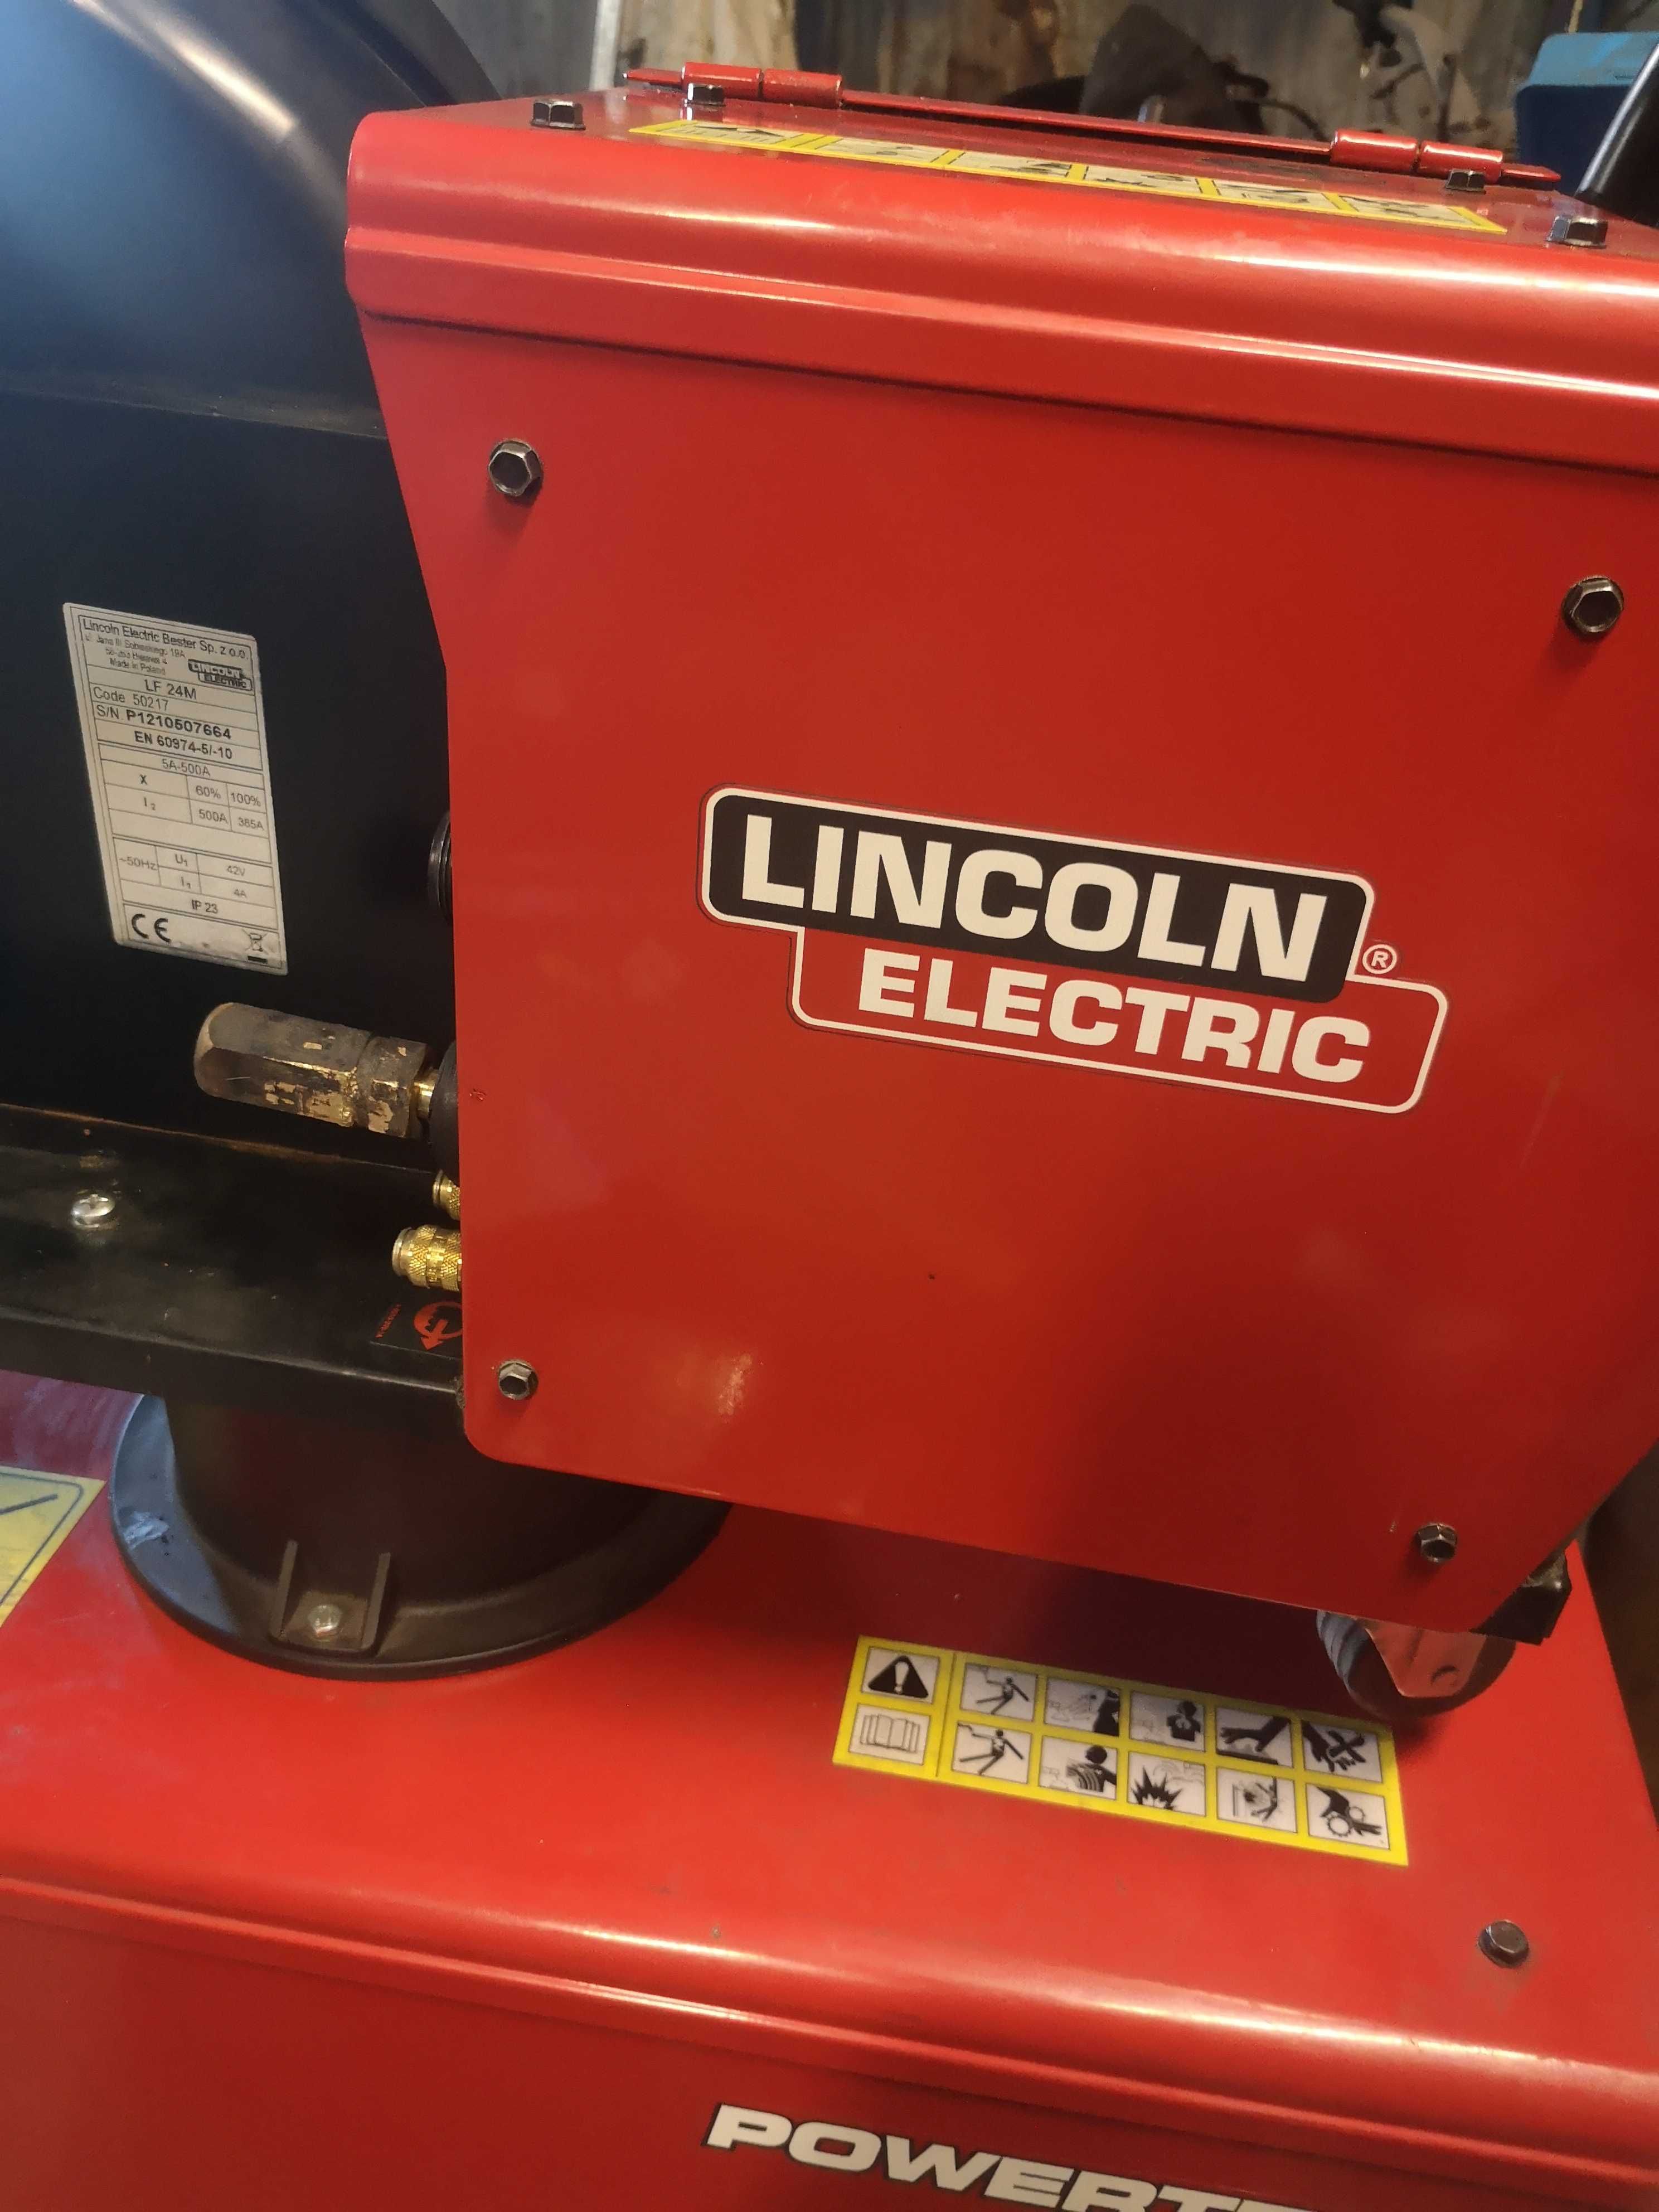 Spawarka Lincoln electric Powertec 425 S